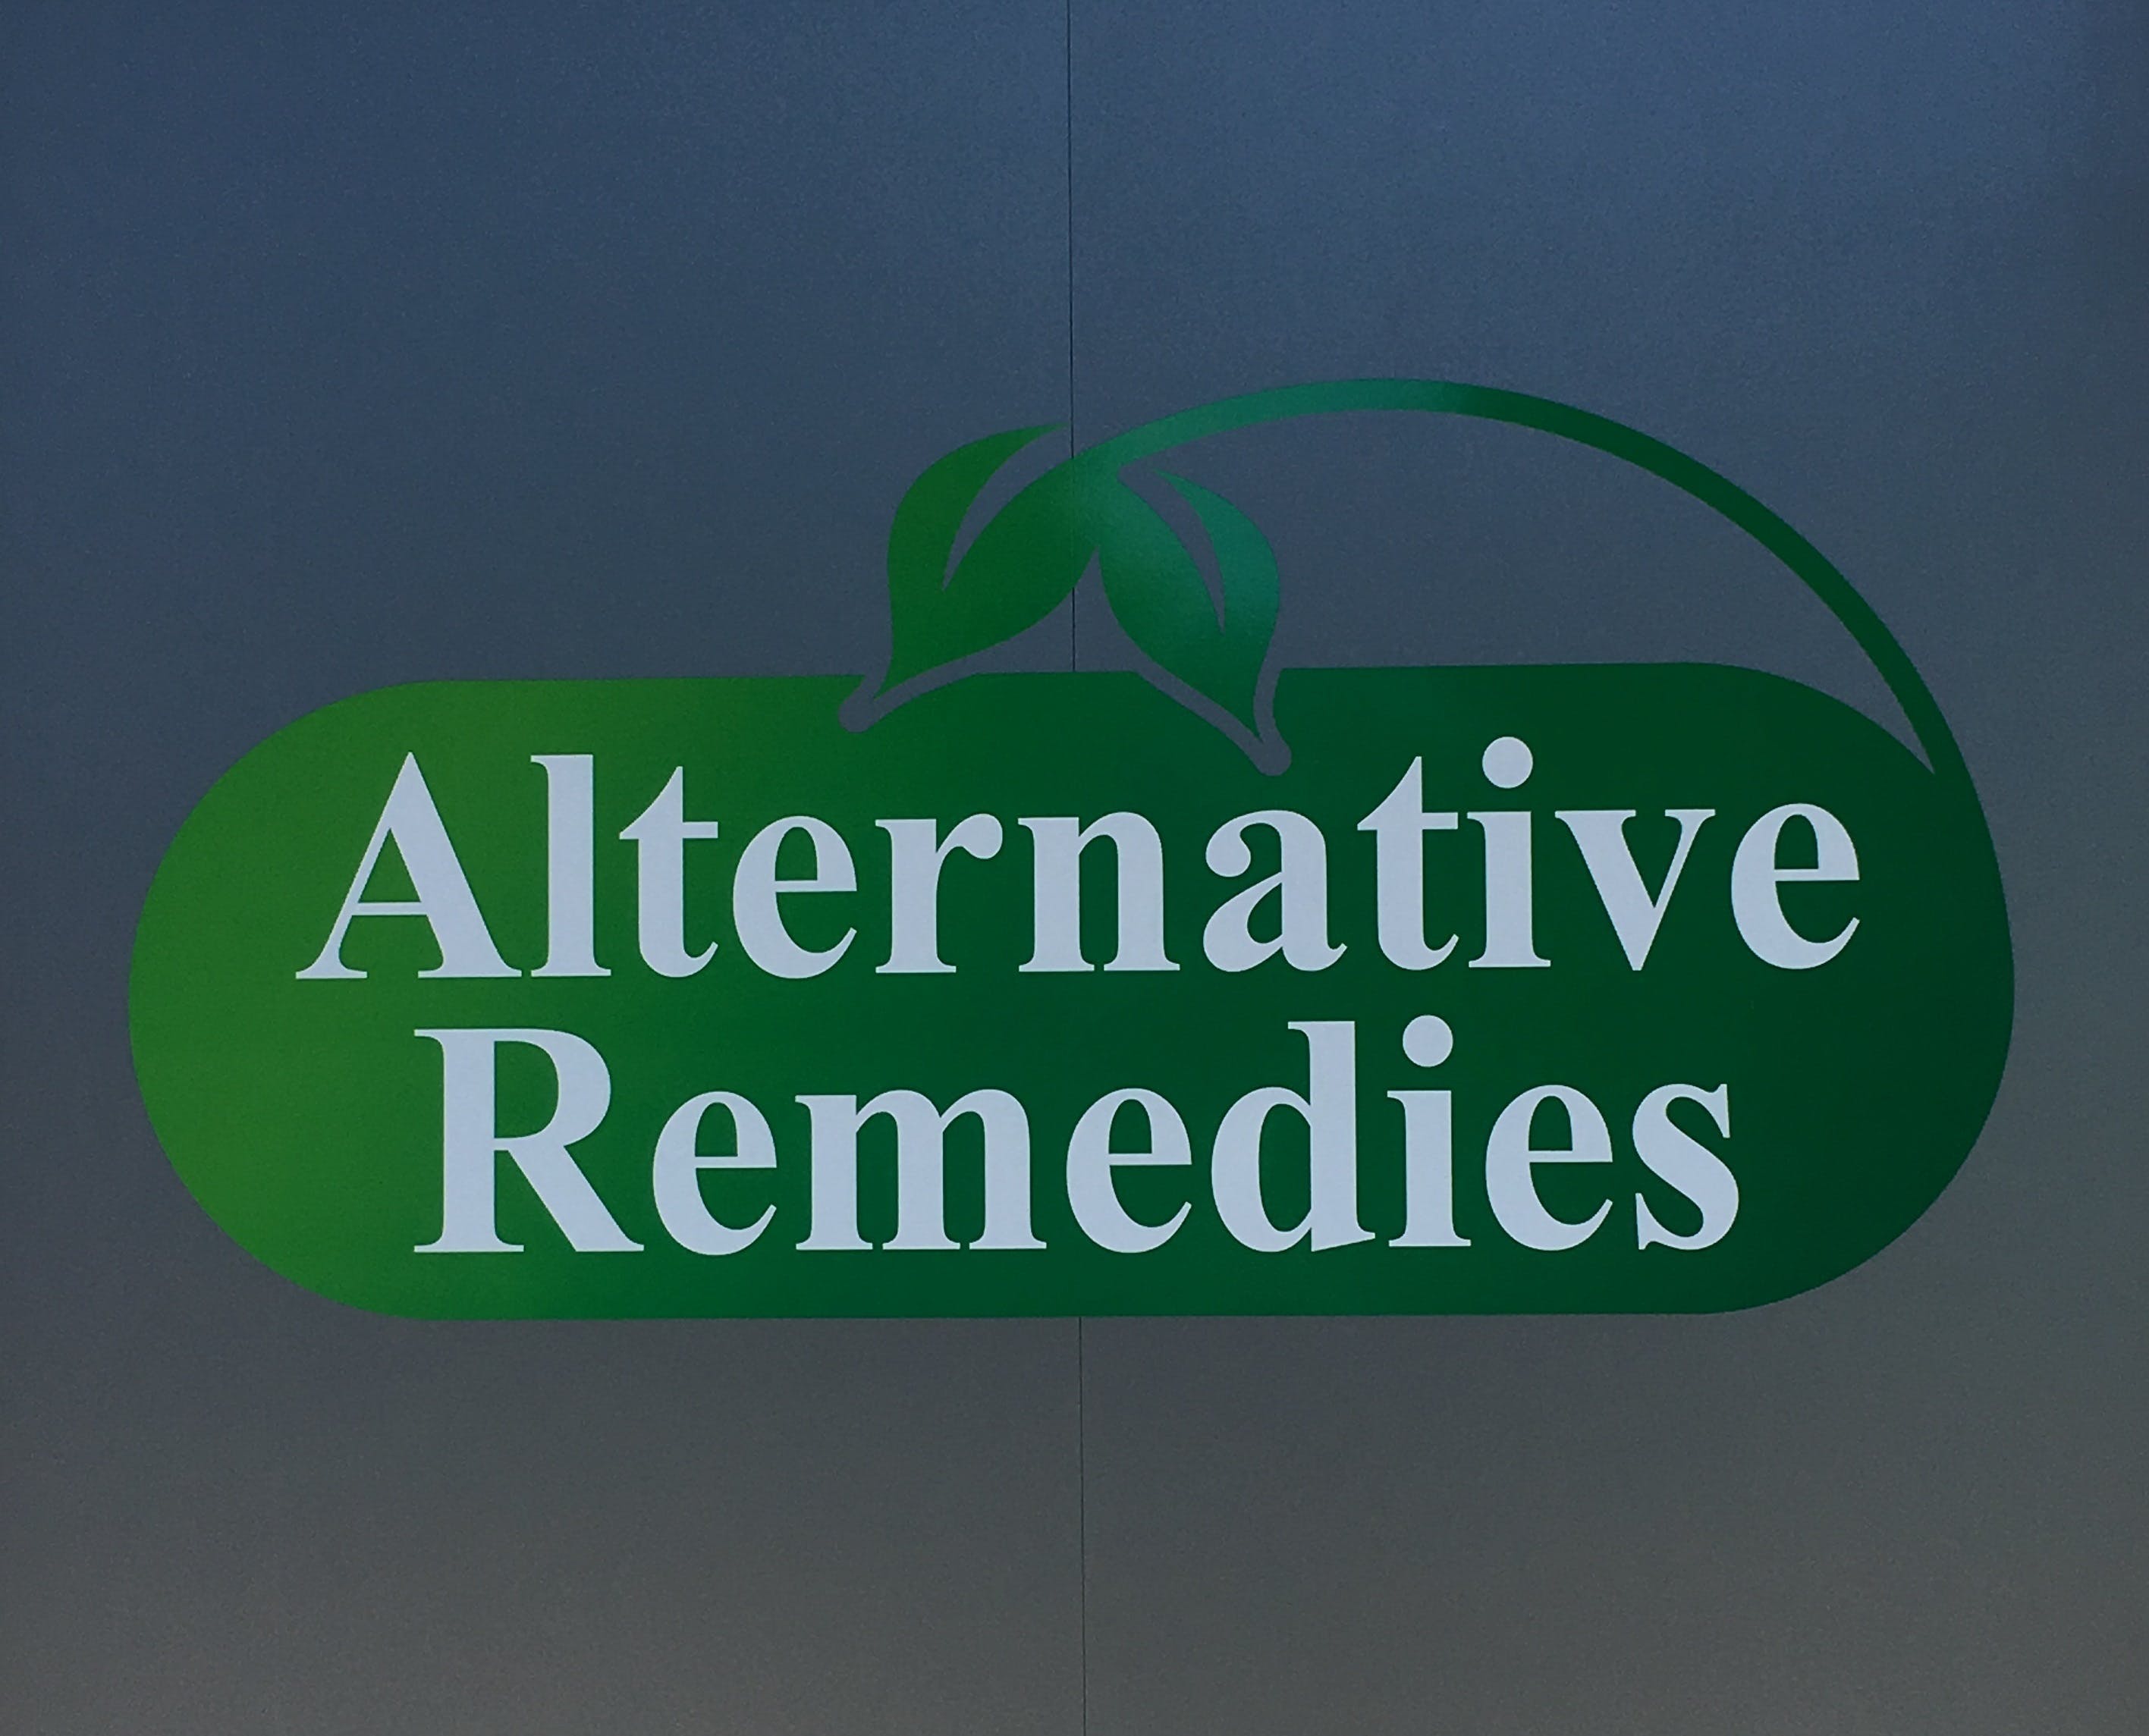 Alternative Remedies - Medical Marijuana Doctors - Cannabizme.com